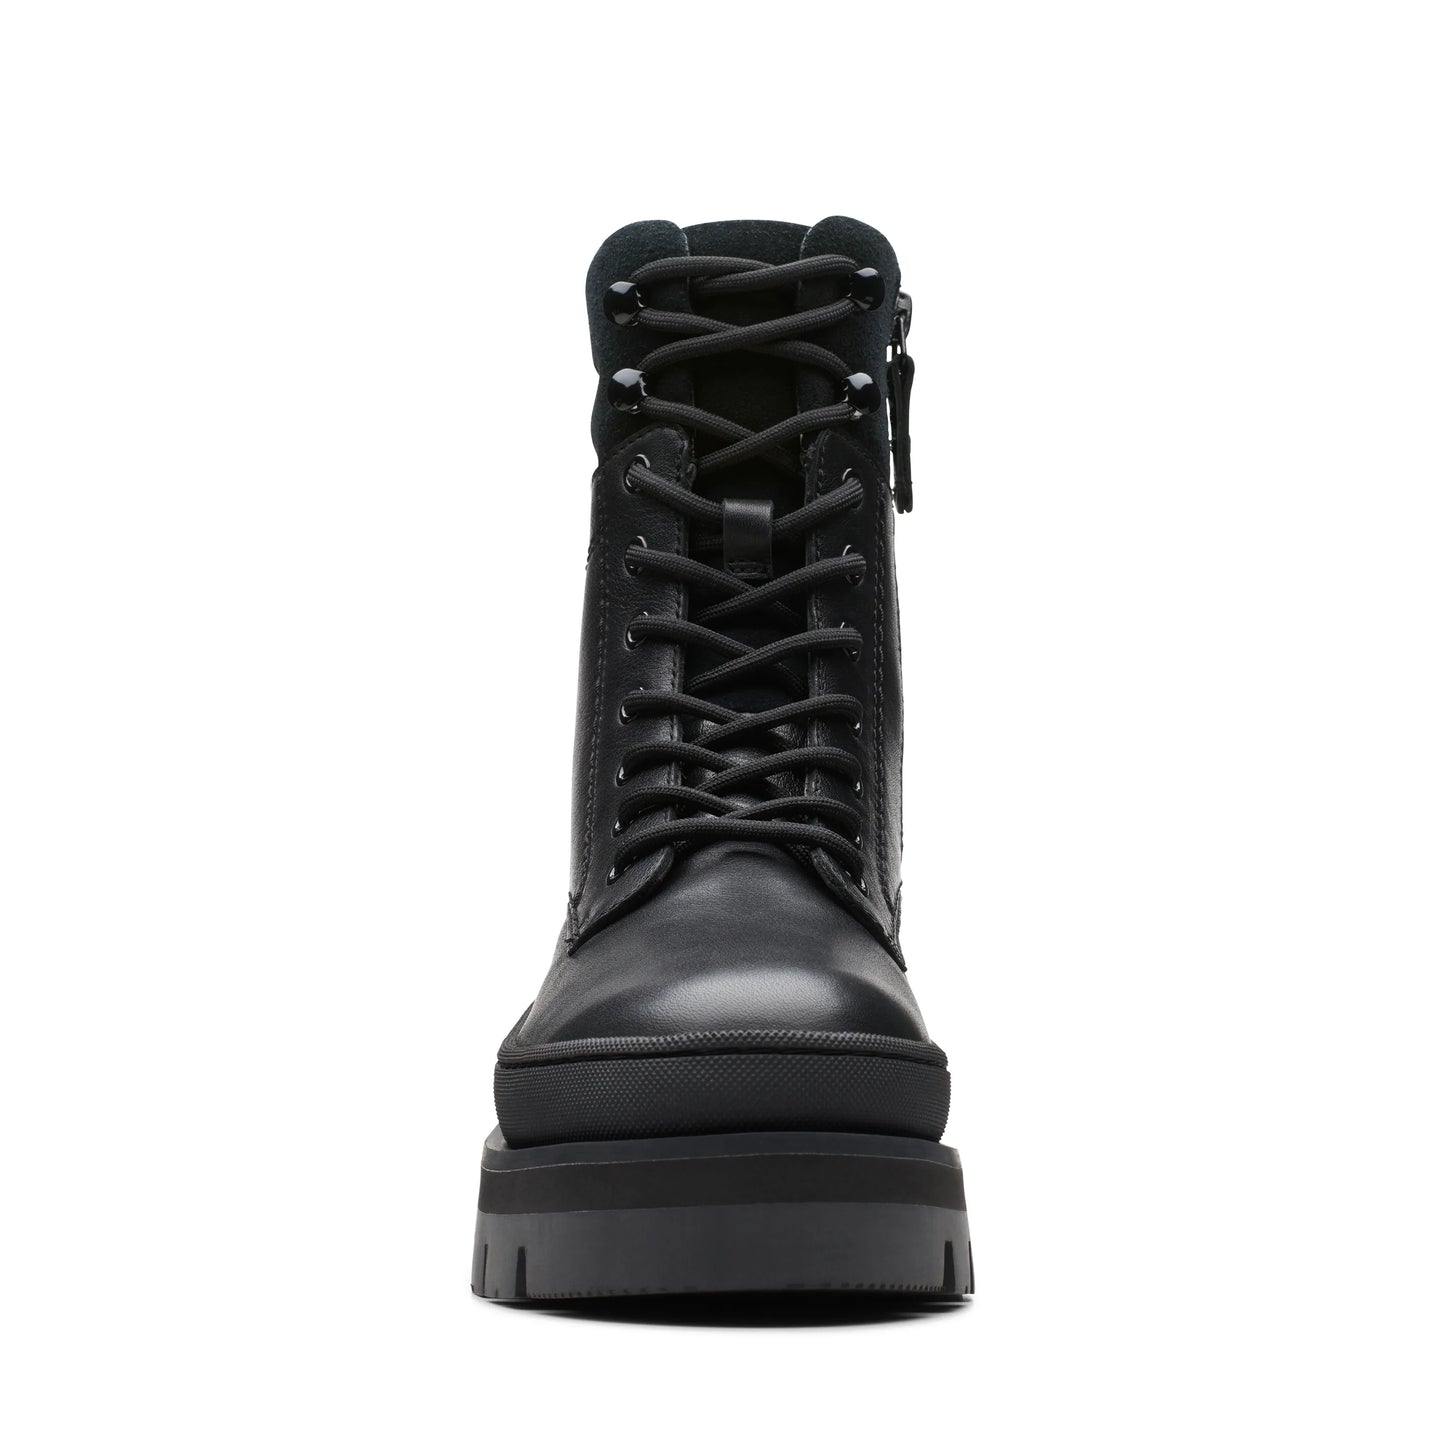 CLARKS | 女性の足首ブーツ | ORIANNA2 HIKE BLACK LEATHER | 黒